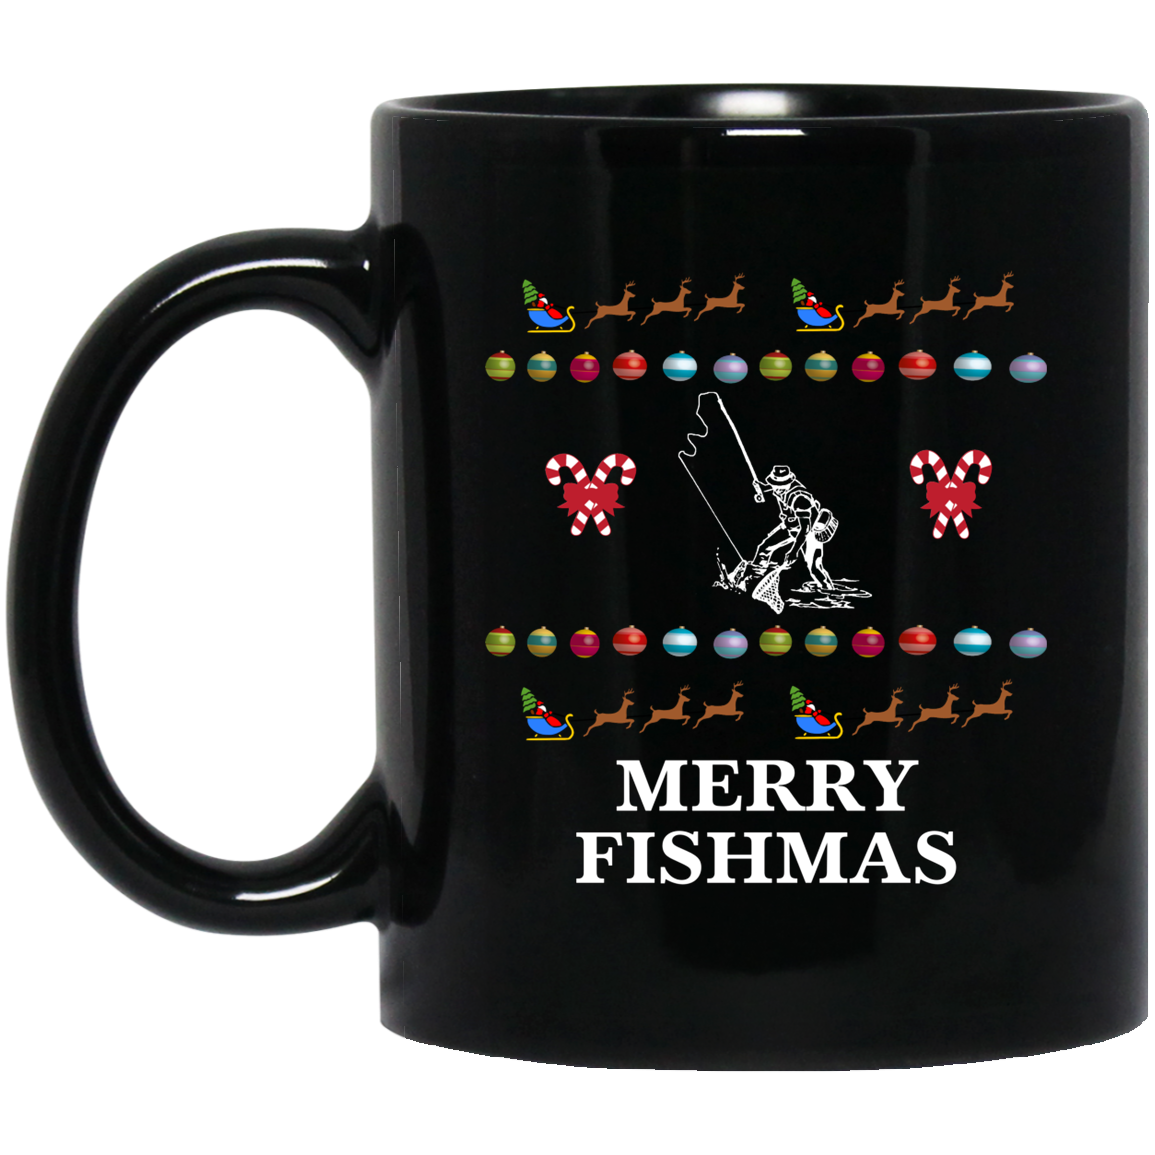 Merry fishmas 11 oz mug black